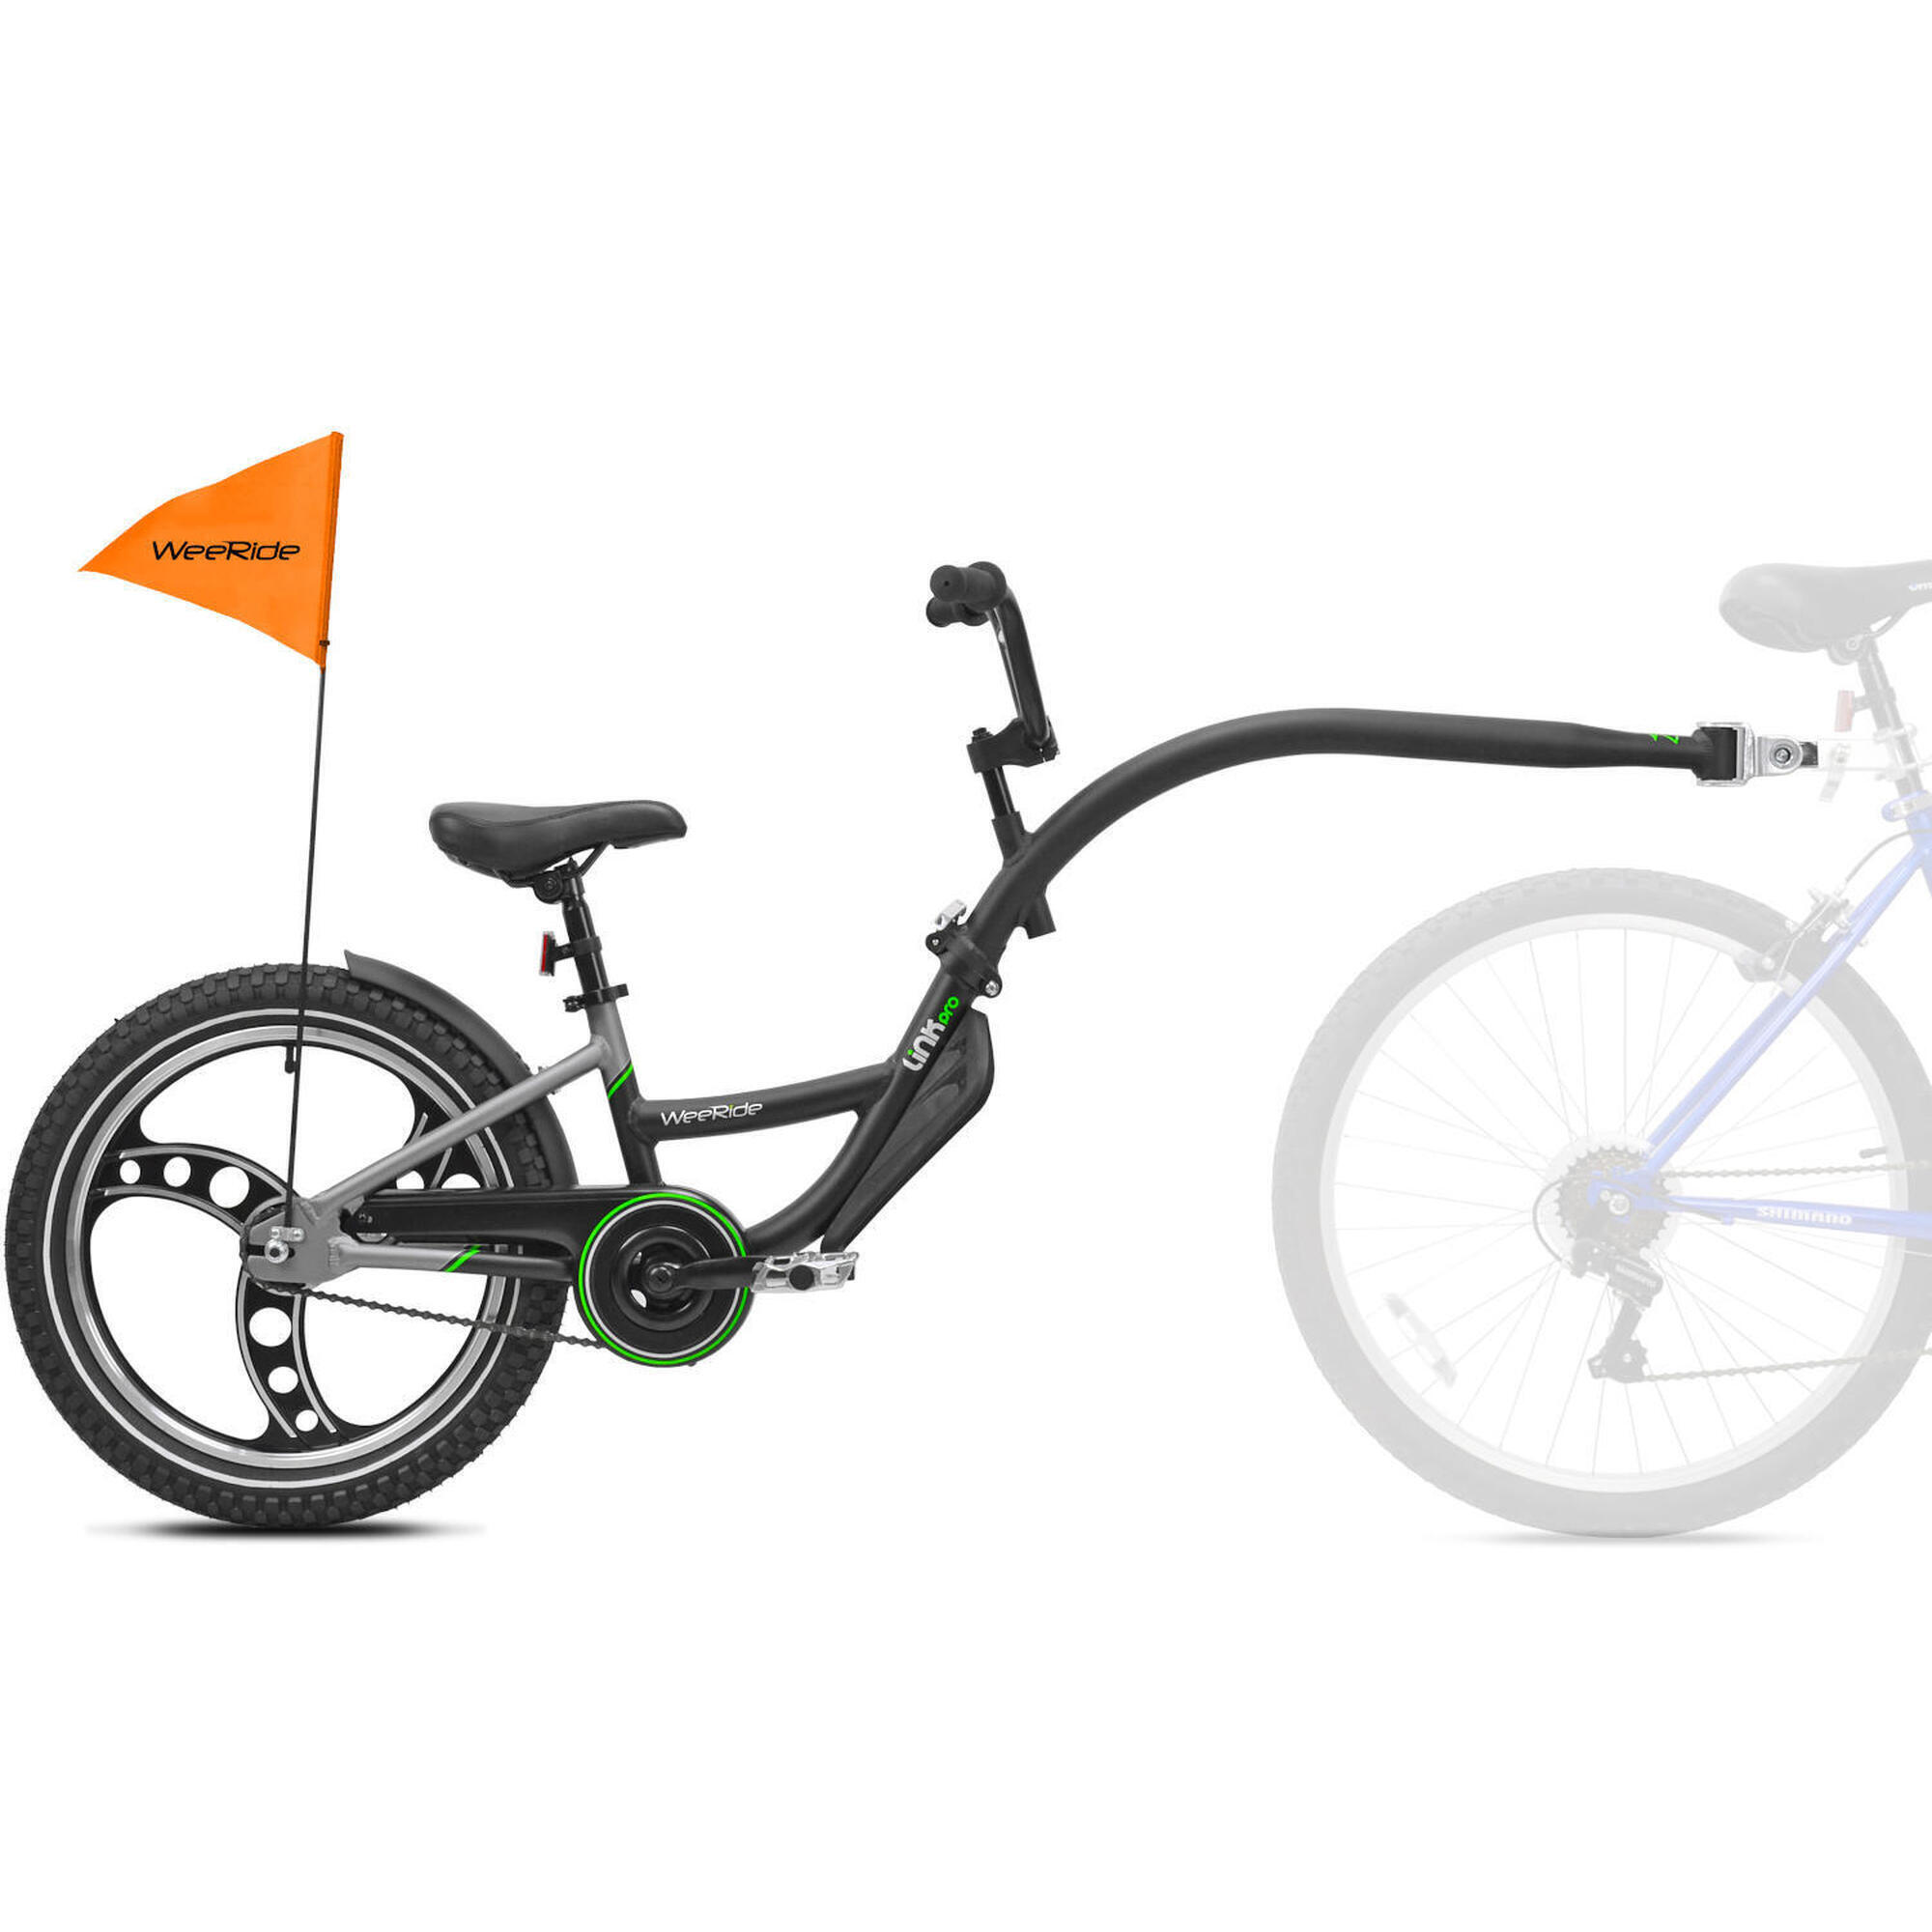 WEERIDE Kazam Link Pro AluminiumTagalong Trailer Child Bike Seat - Black